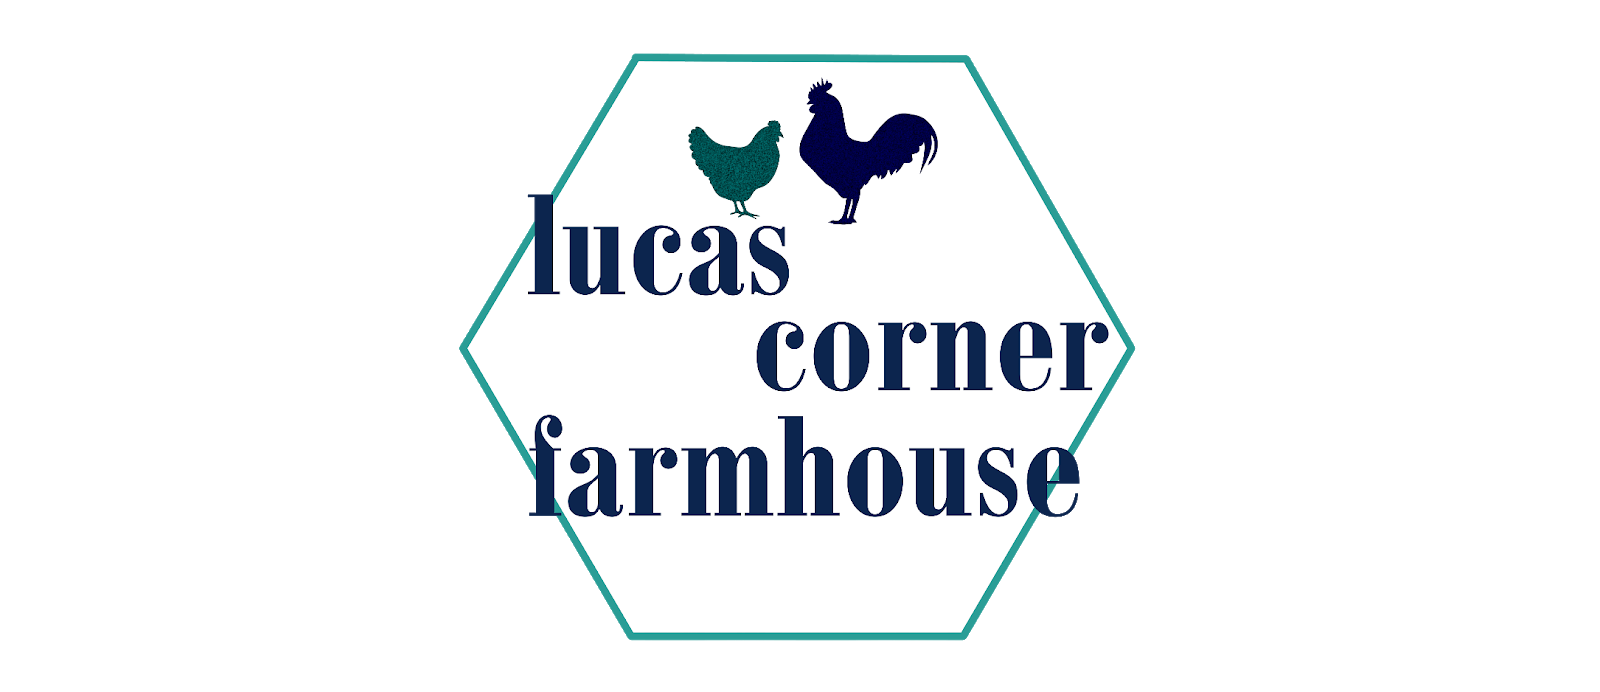 Lucas Corner Farmhouse